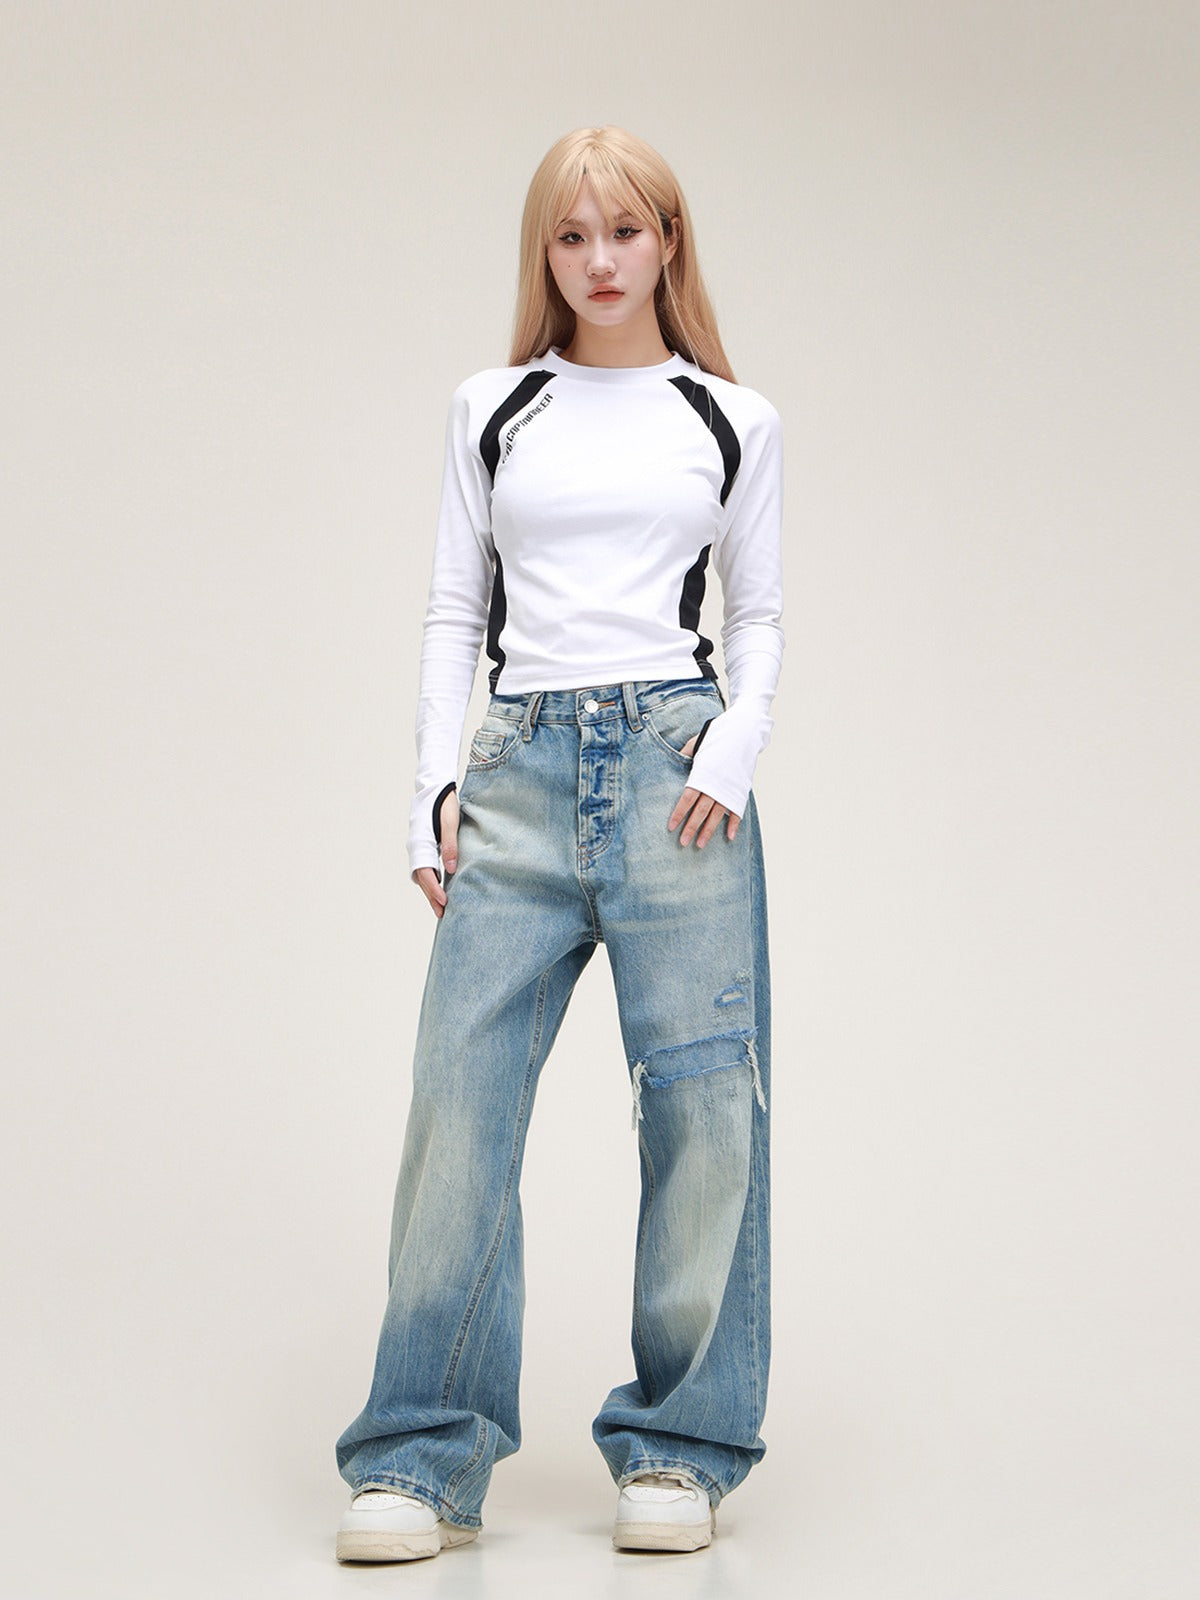 American Vintage zerrissene Distressed Wash Jeans Hosen